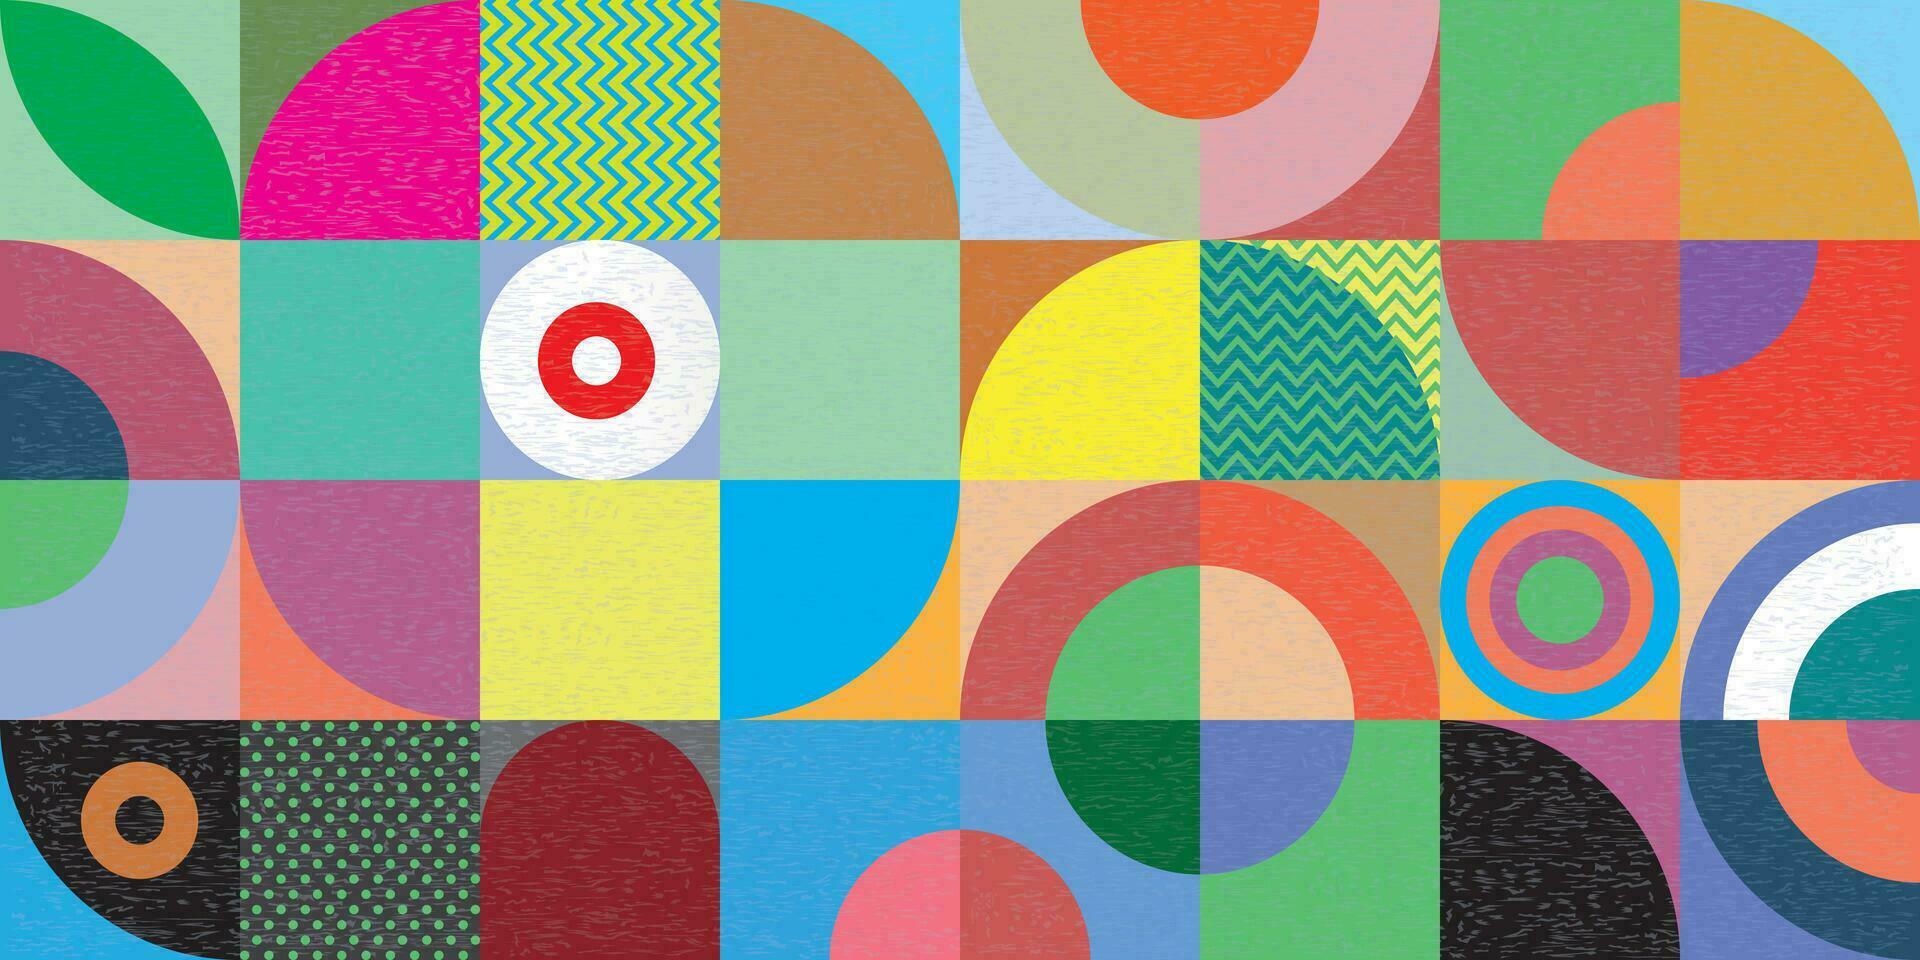 abstrakt geometrisch Mosaik Muster dekorativ Ornament lebendig Farben Hintergrund Vektor Illustration.